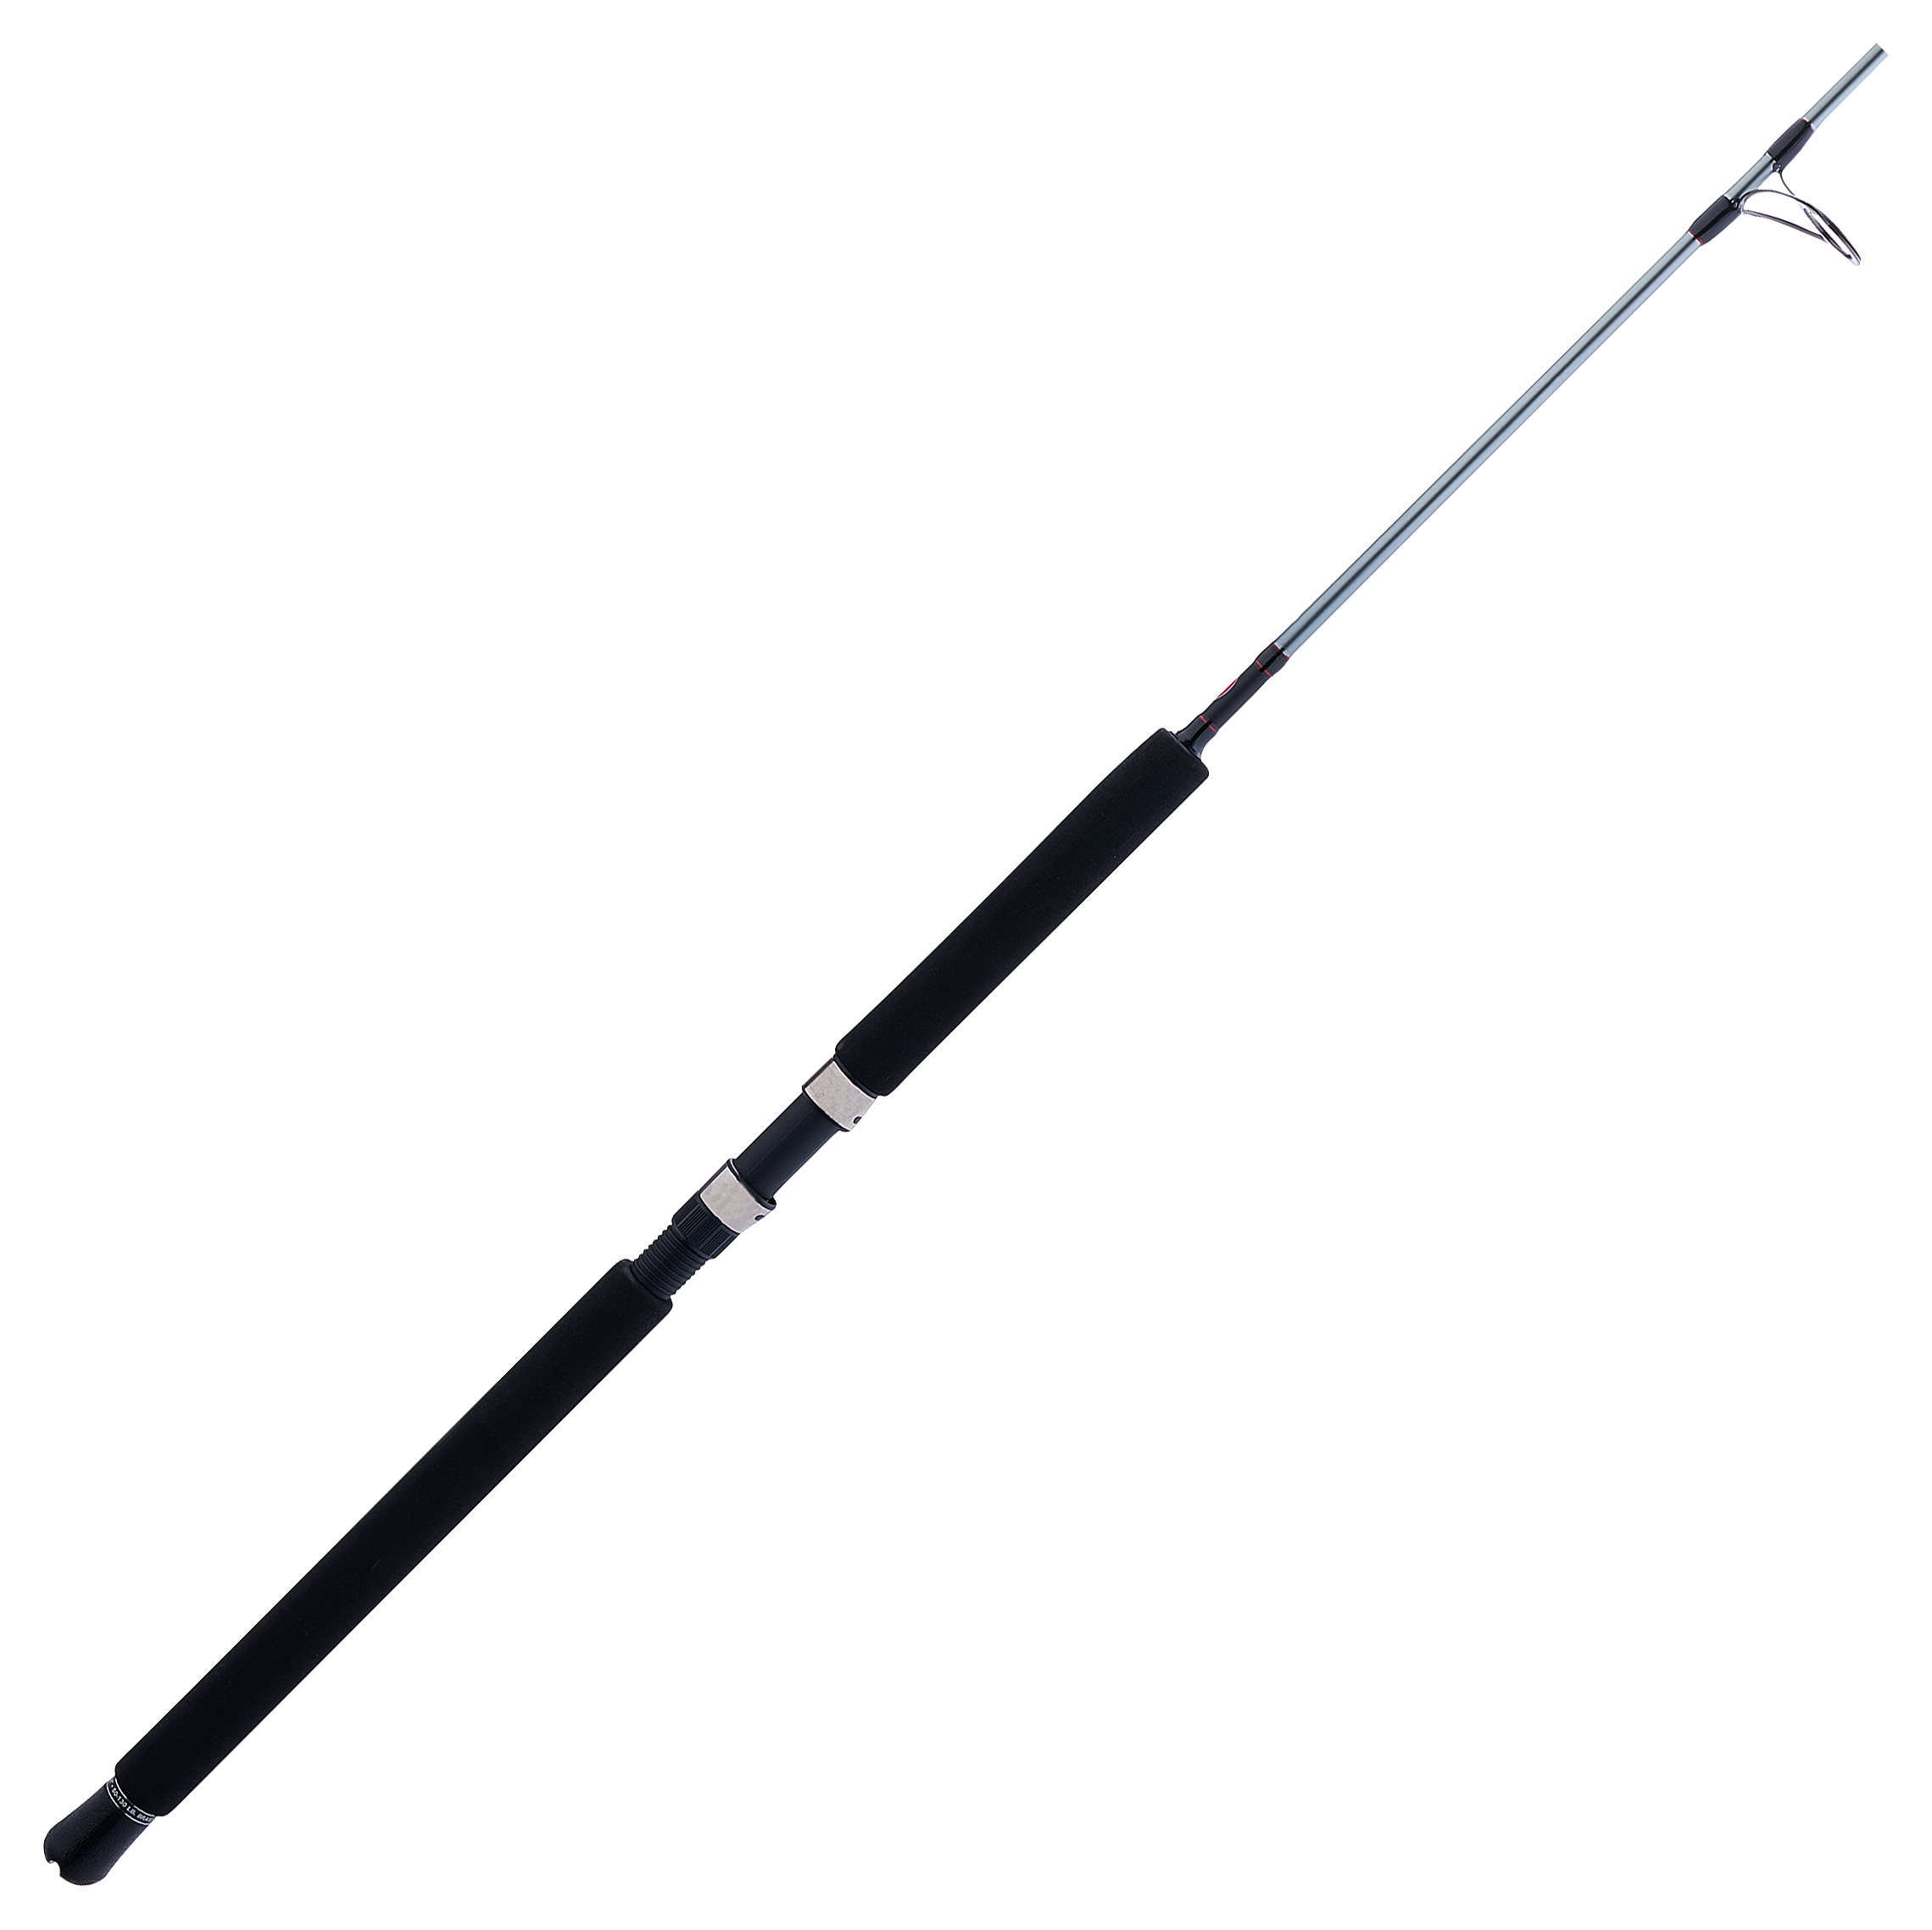 PENN Rampage Jigging Rod 6'6 Medium 30-80lb